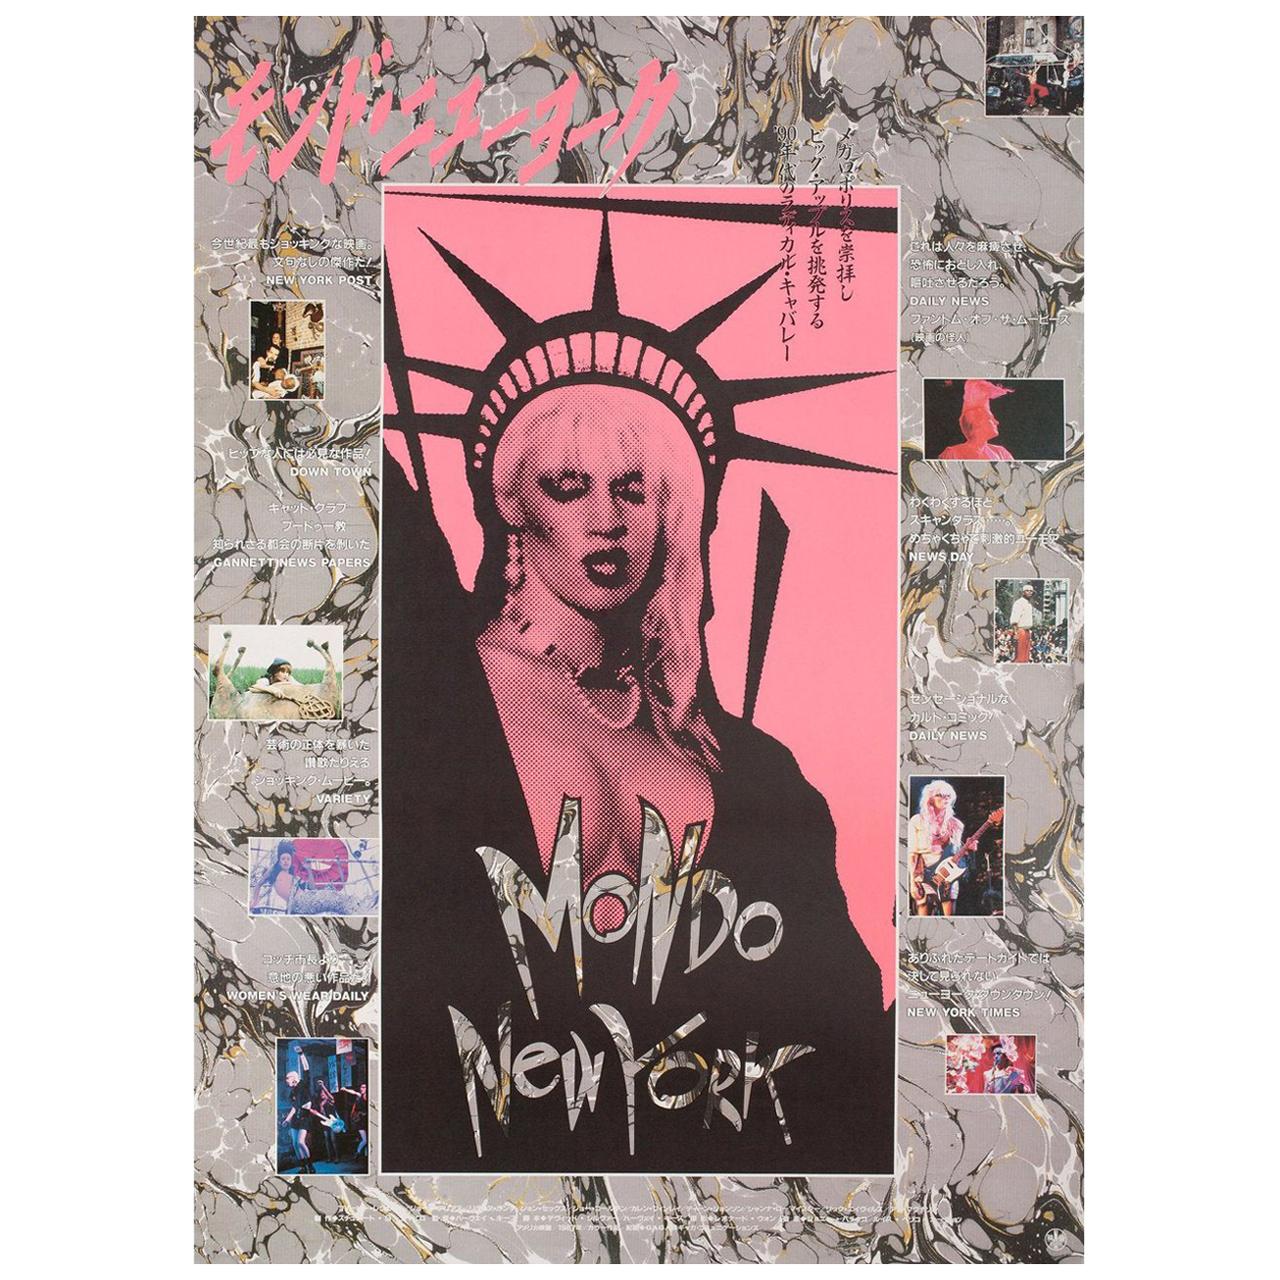 Mondo New York 1988 Japanese B2 Film Poster